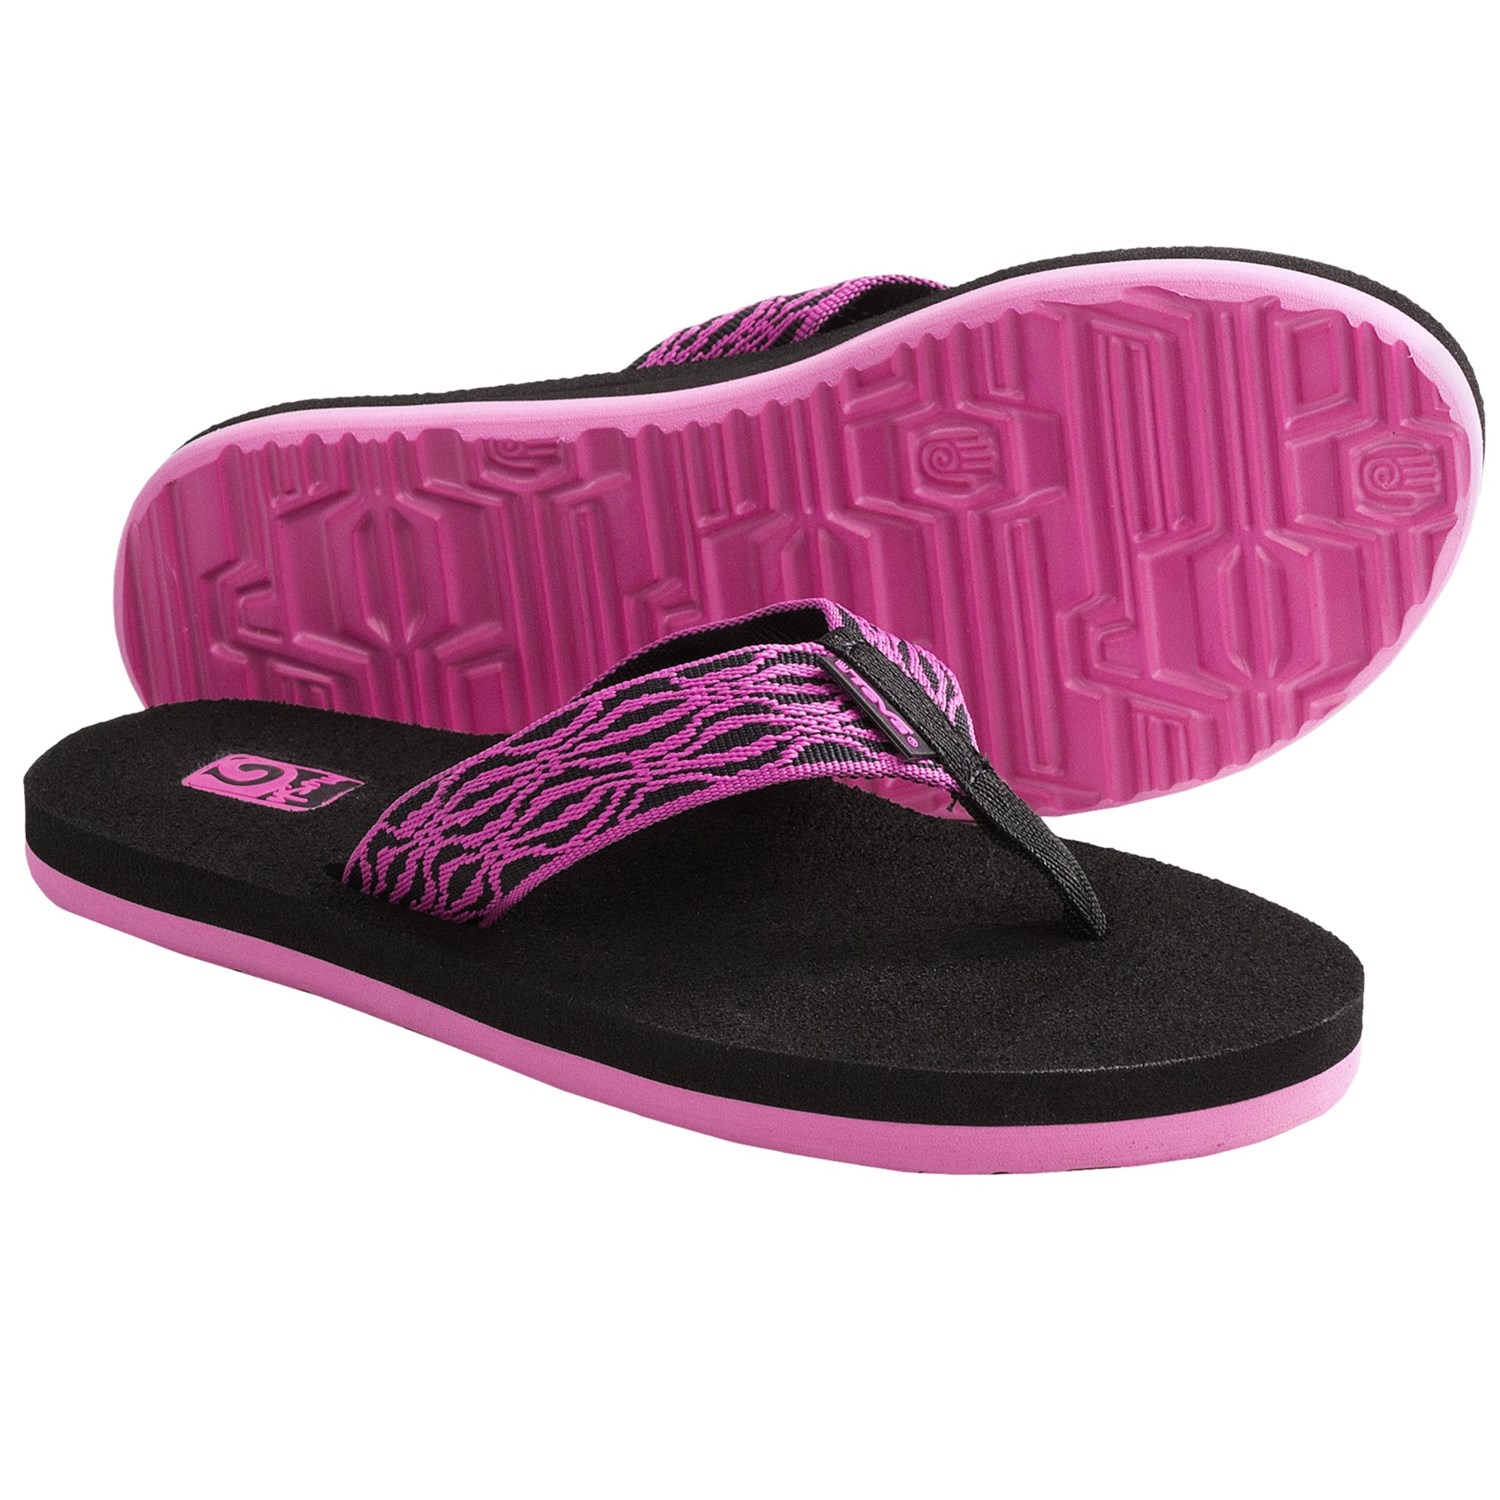 Teva Mush II Thong Sandals - Flip-Flops (For Women) in Liquid Stripes ...